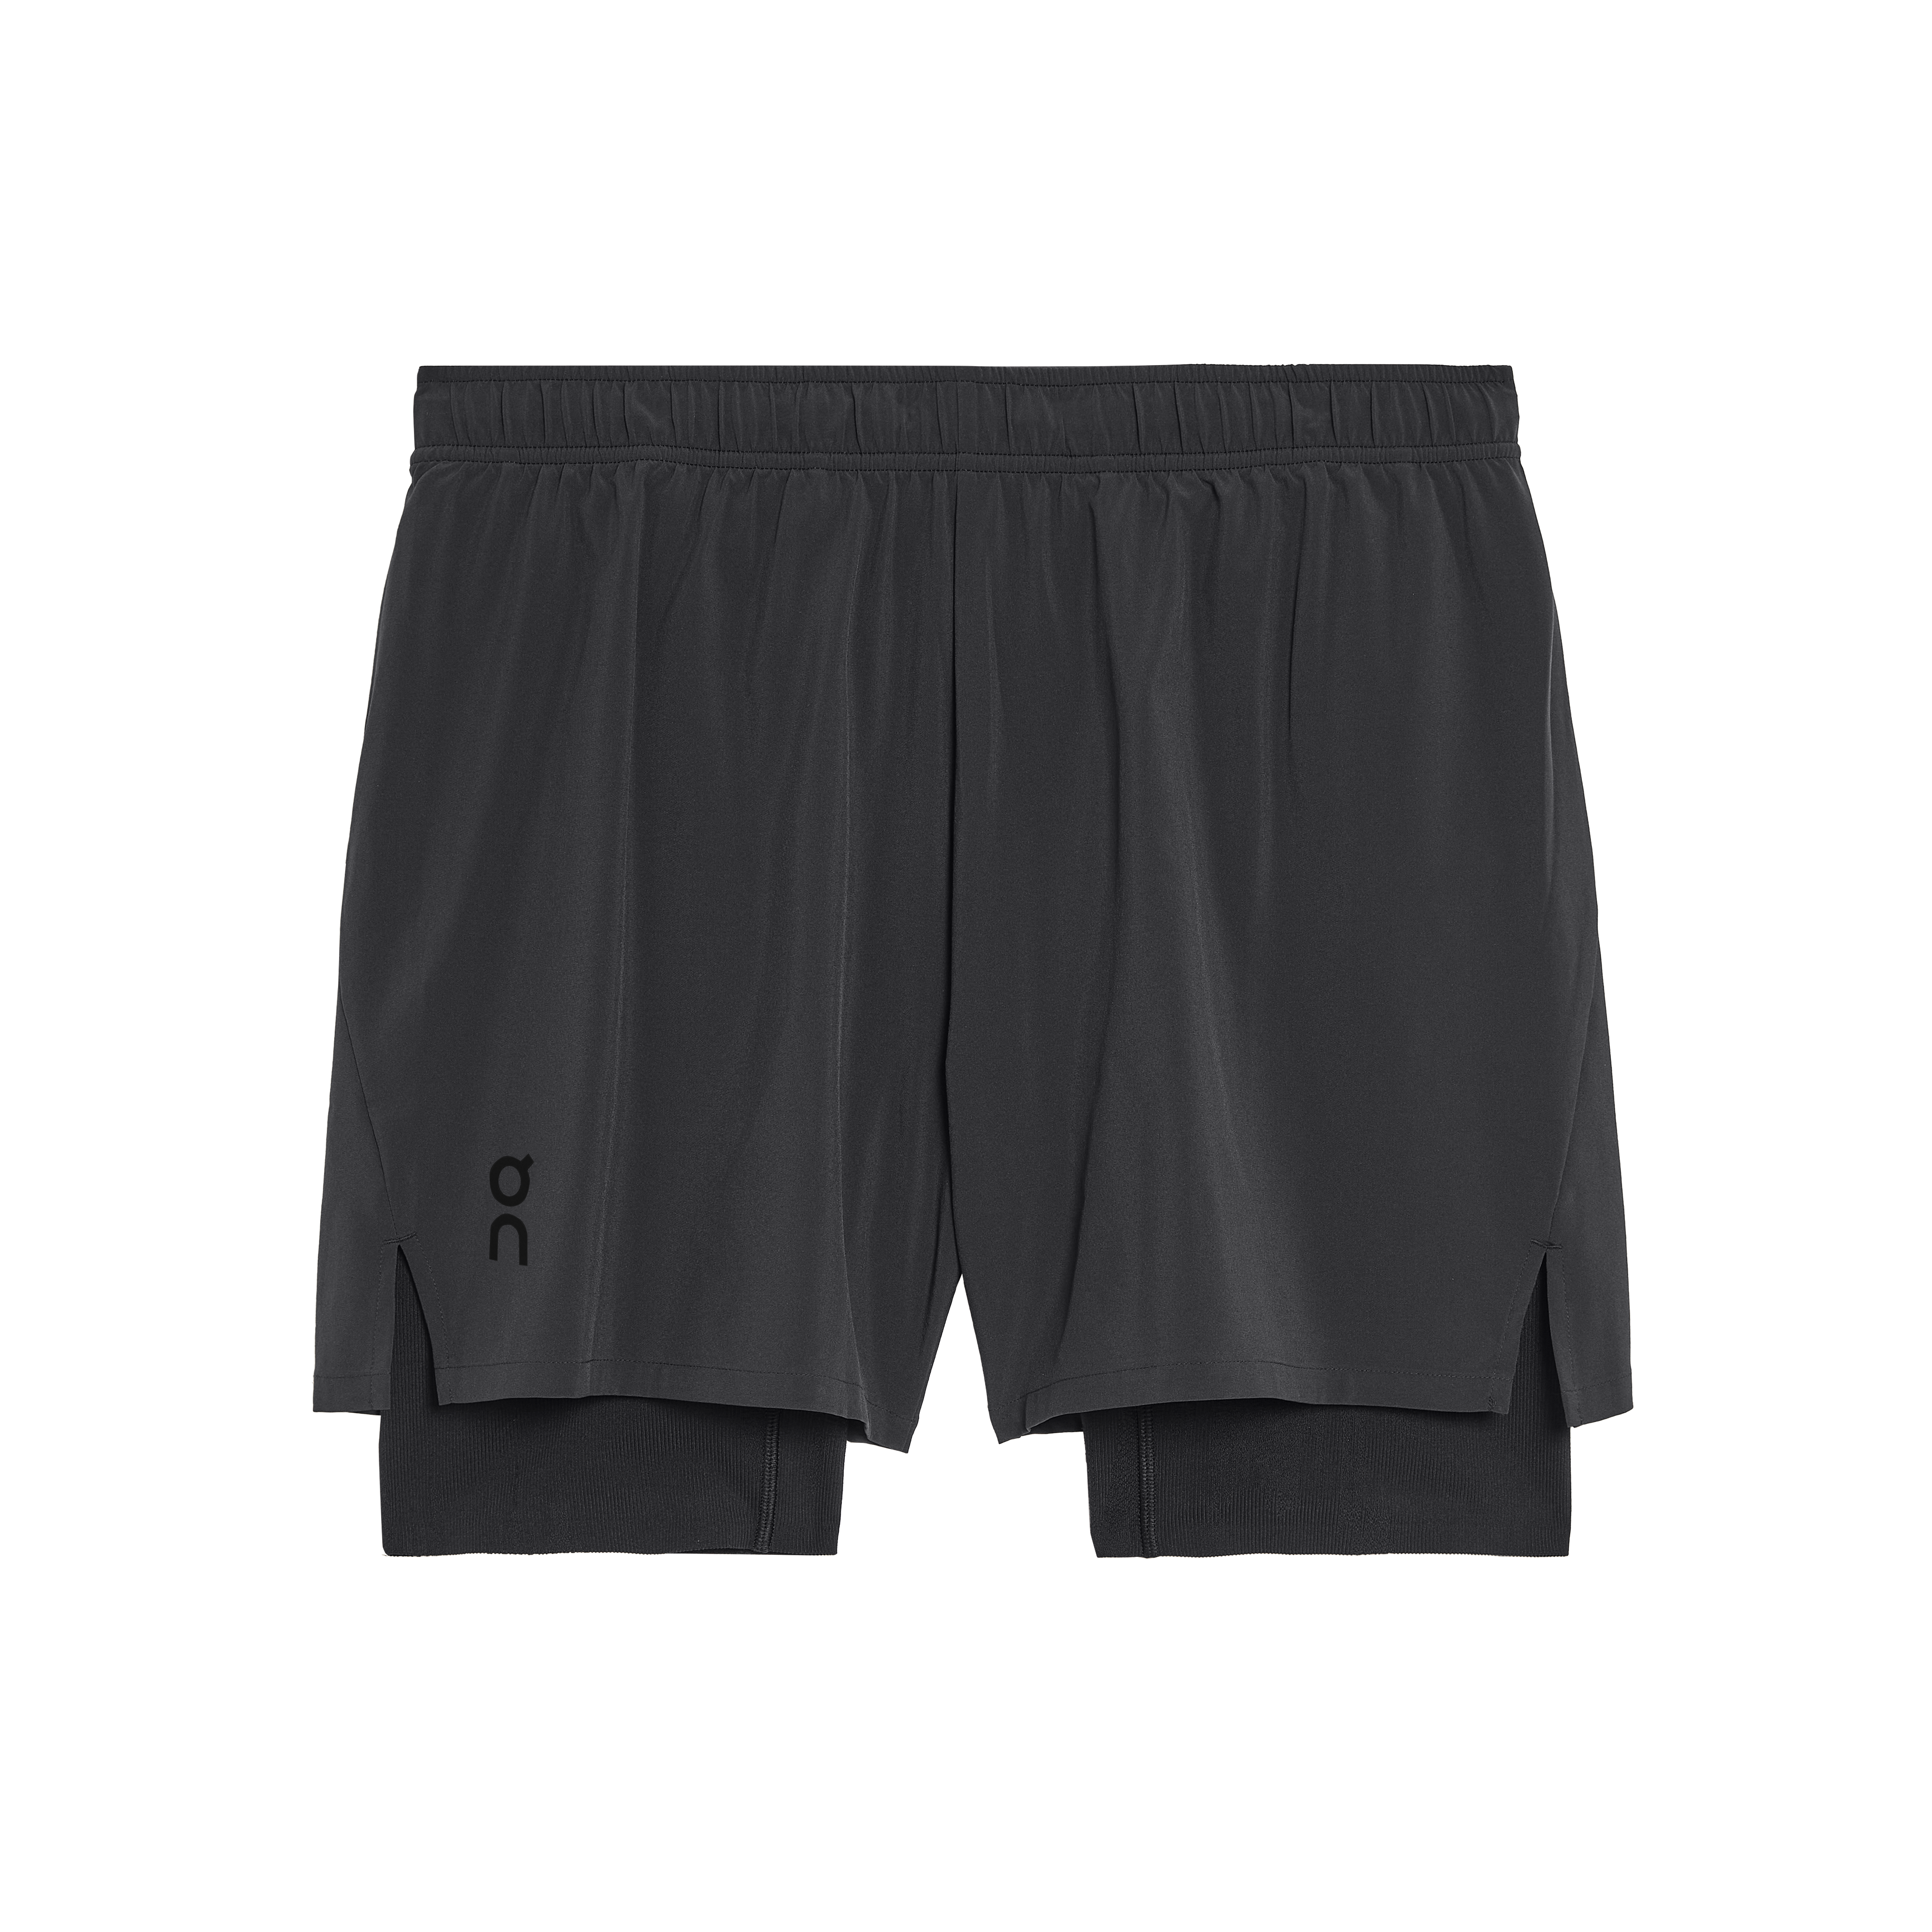 Everyday Drip: Redbat Classics Men's Knit Shorts, shorts